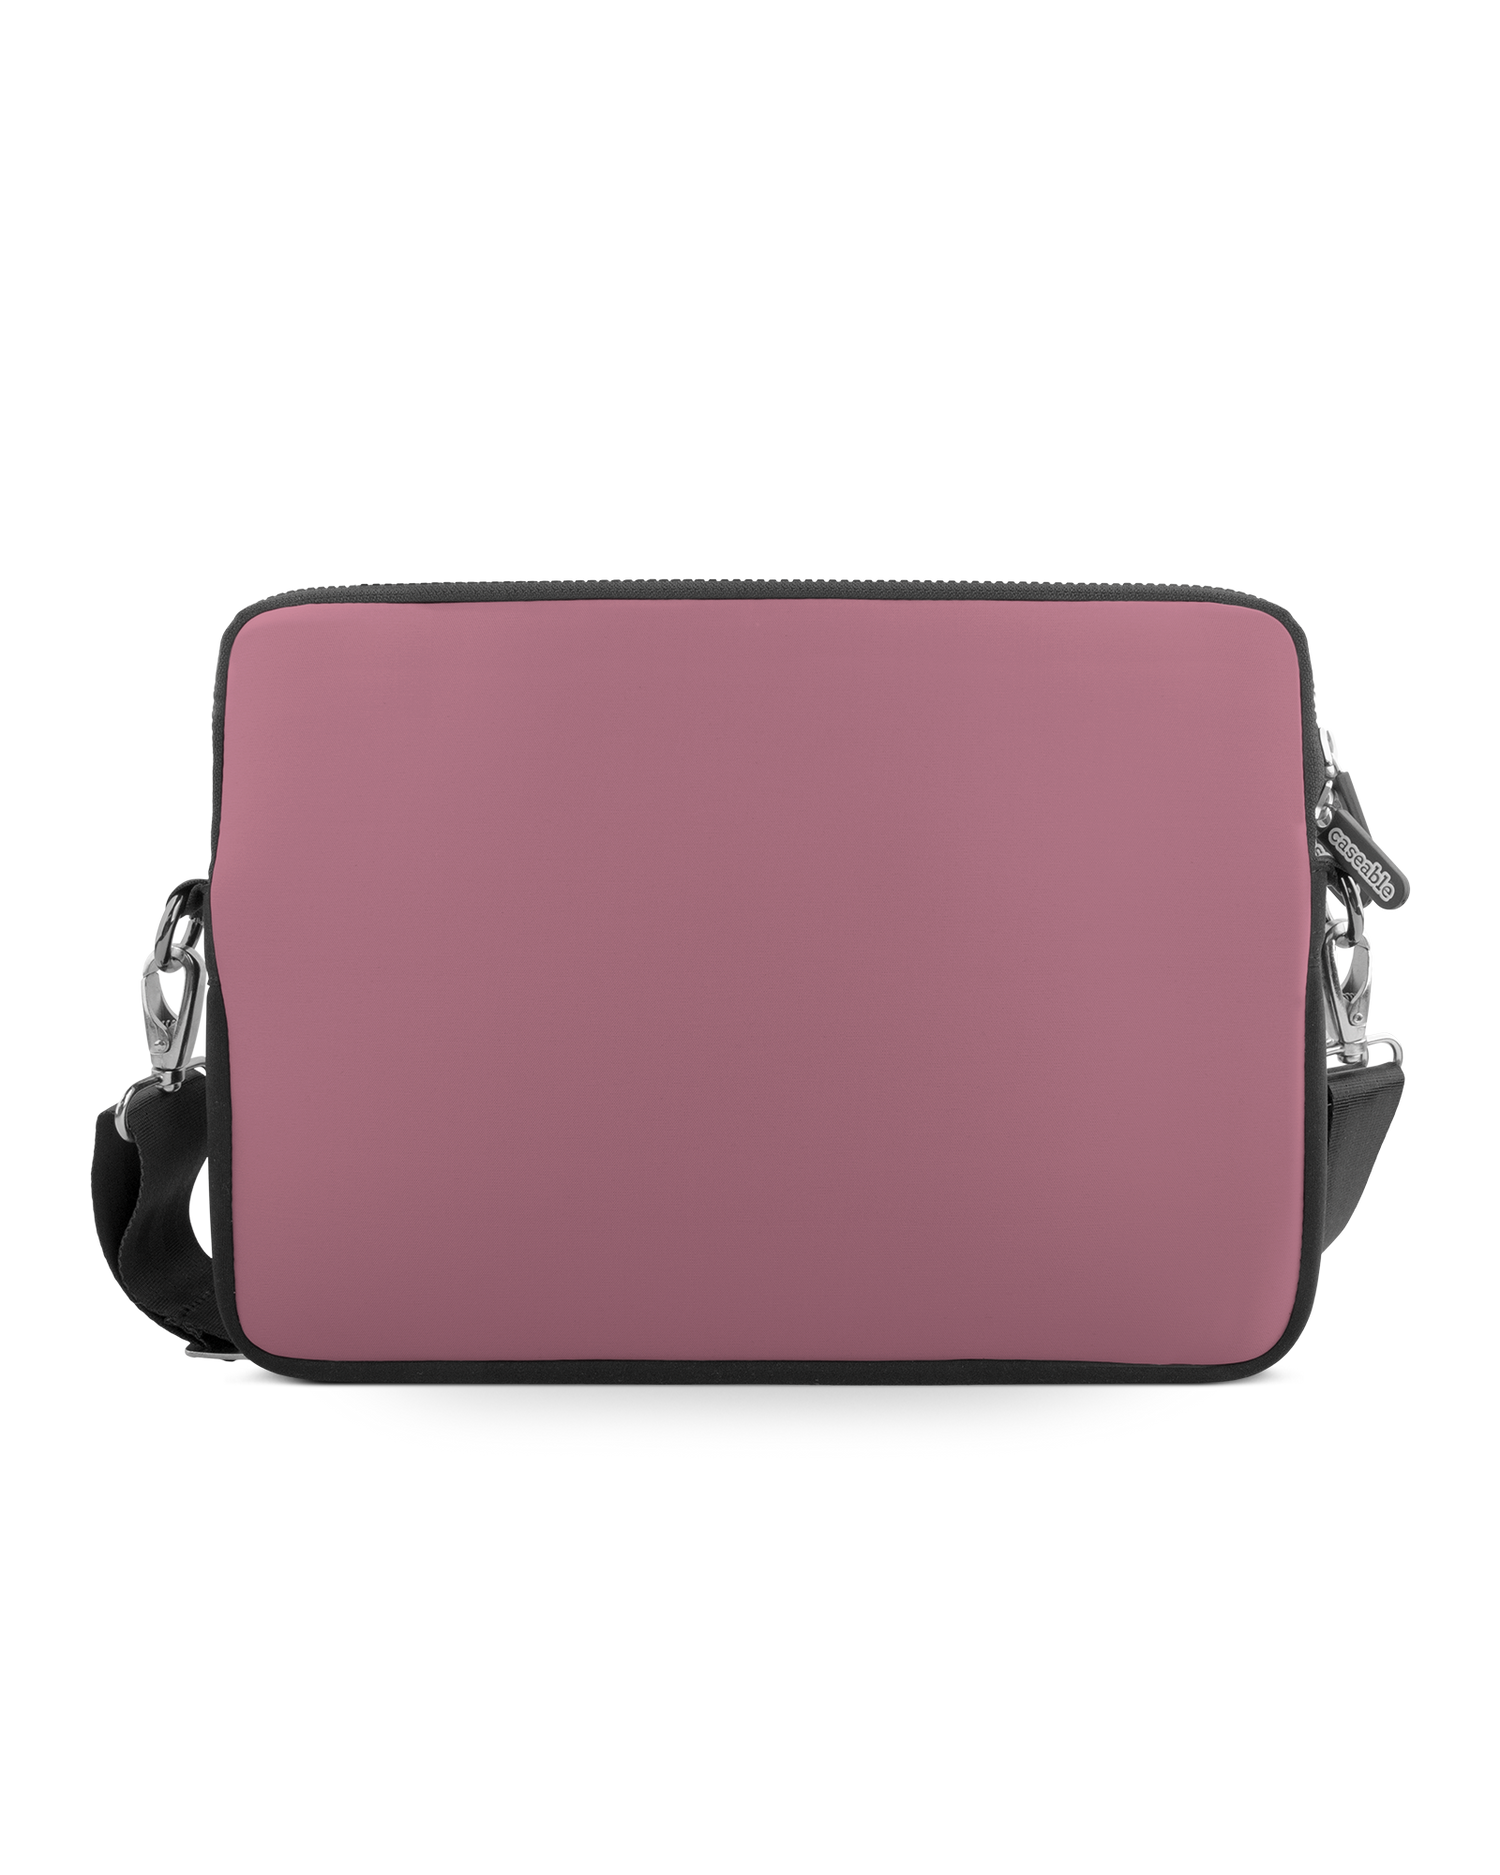 WILD ROSE Premium Laptop Bag 13-14 inch: Front View